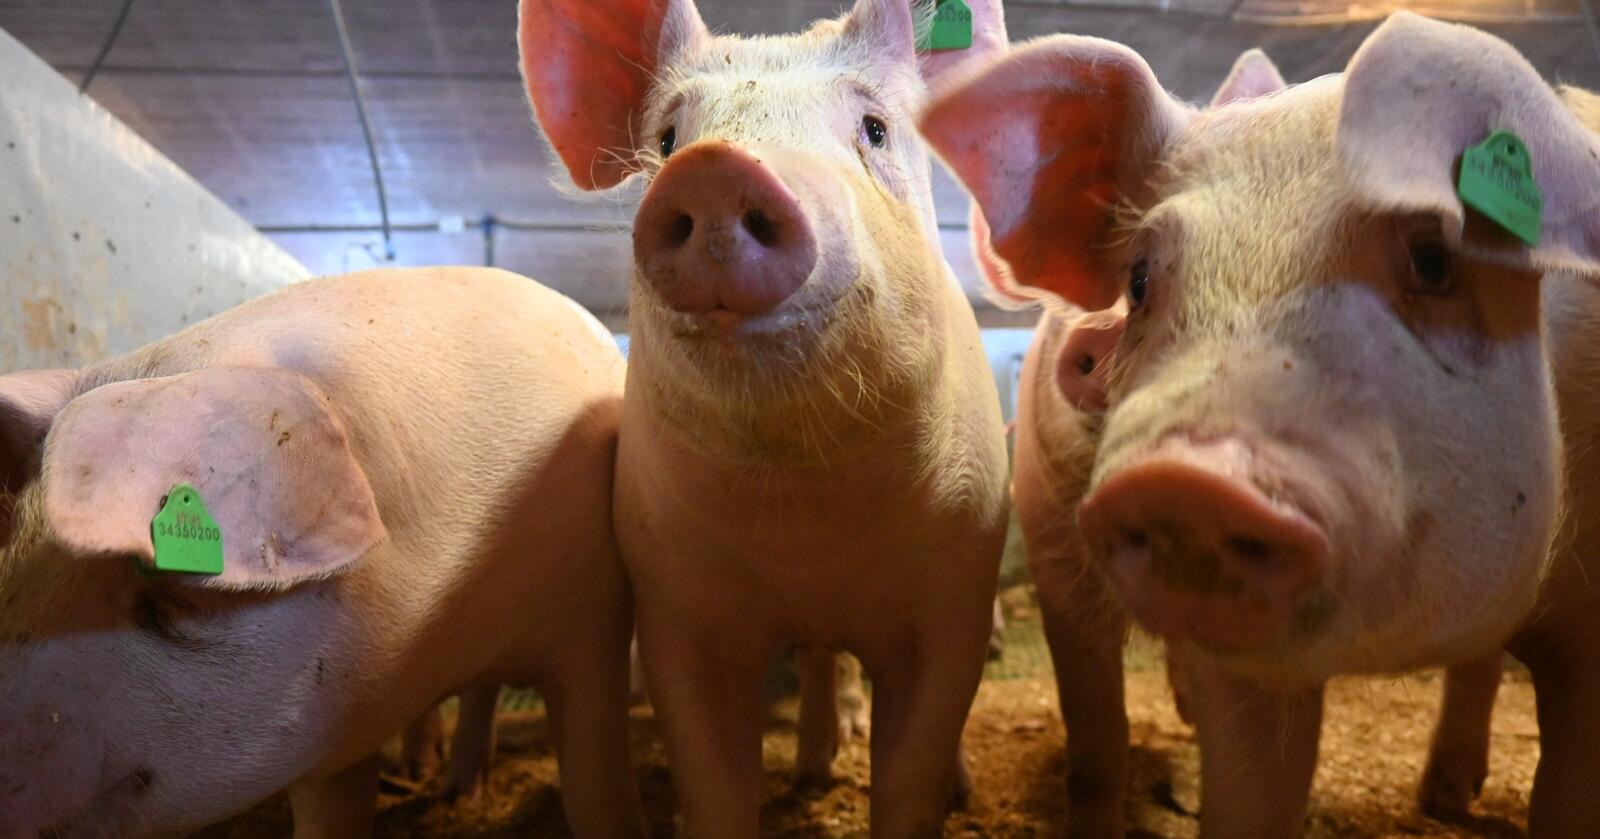 Kan gjærprotein være helsefremmende for gris? Ny forskning kan muligens peke i den retninga. Foto: Marit Glærum 